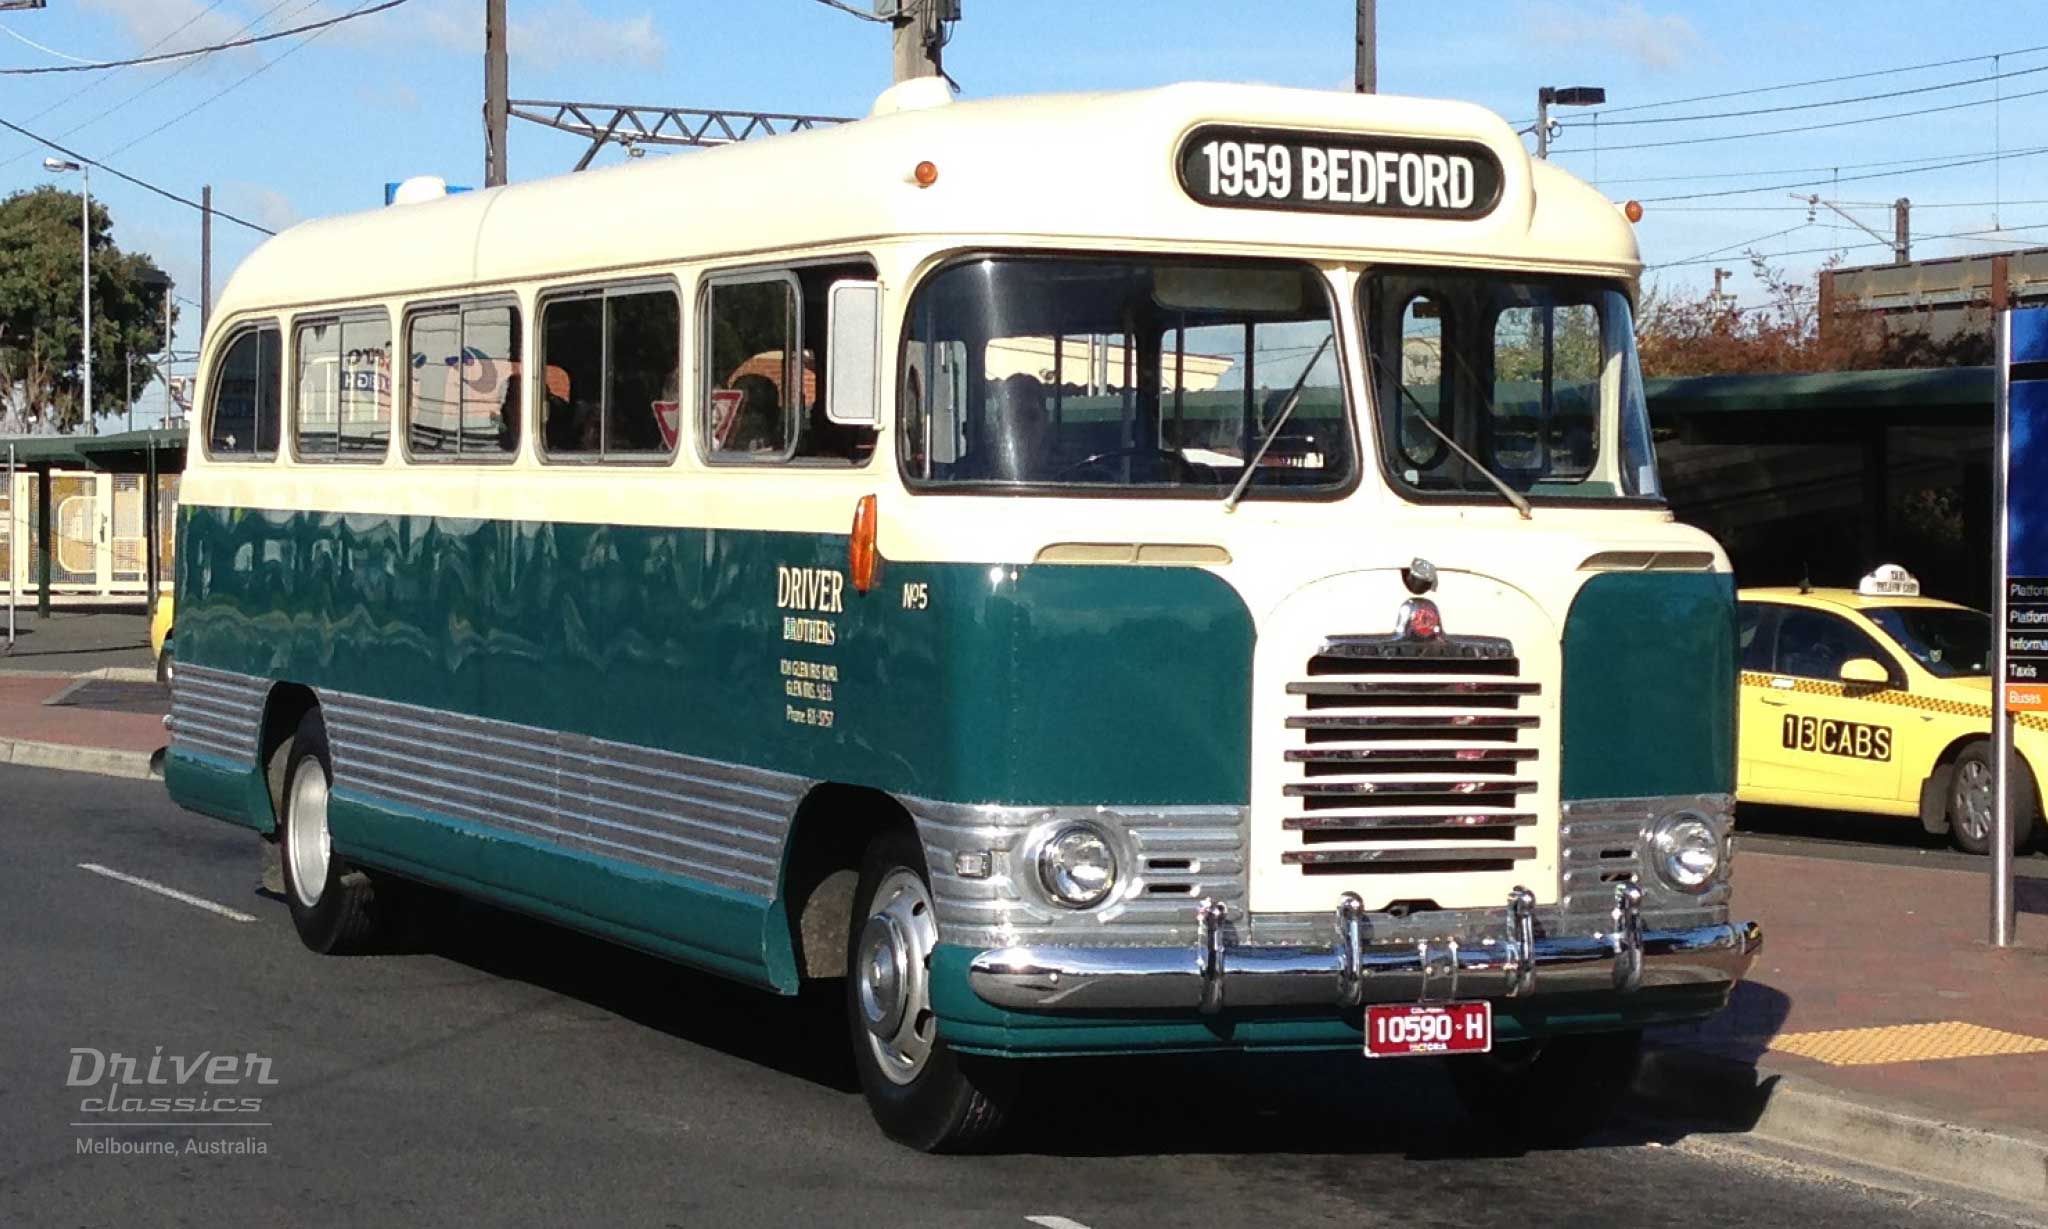 1959 Bedford SB3 bus, June 2013